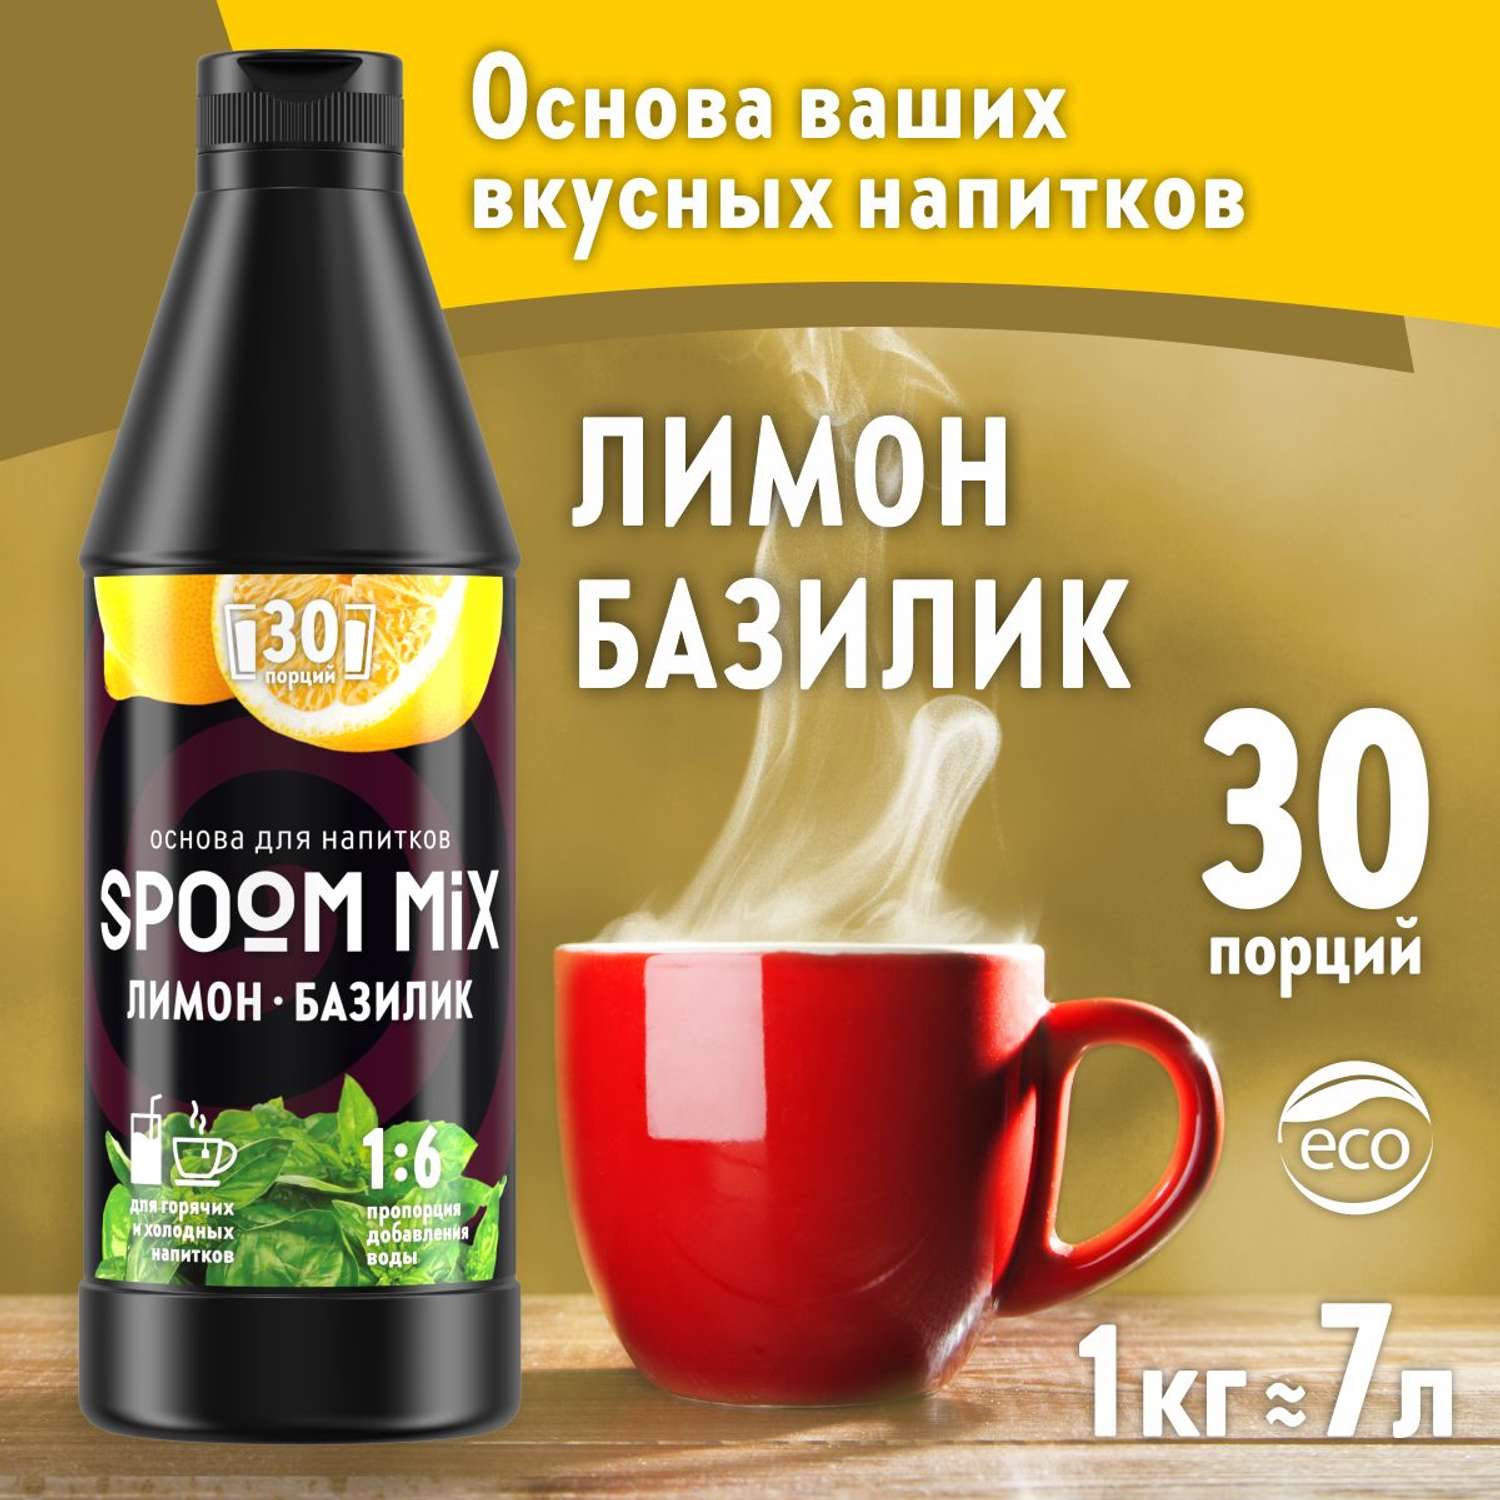 Основа для напитков SPOOM MIX Лимон базилик 1 кг - фото 1